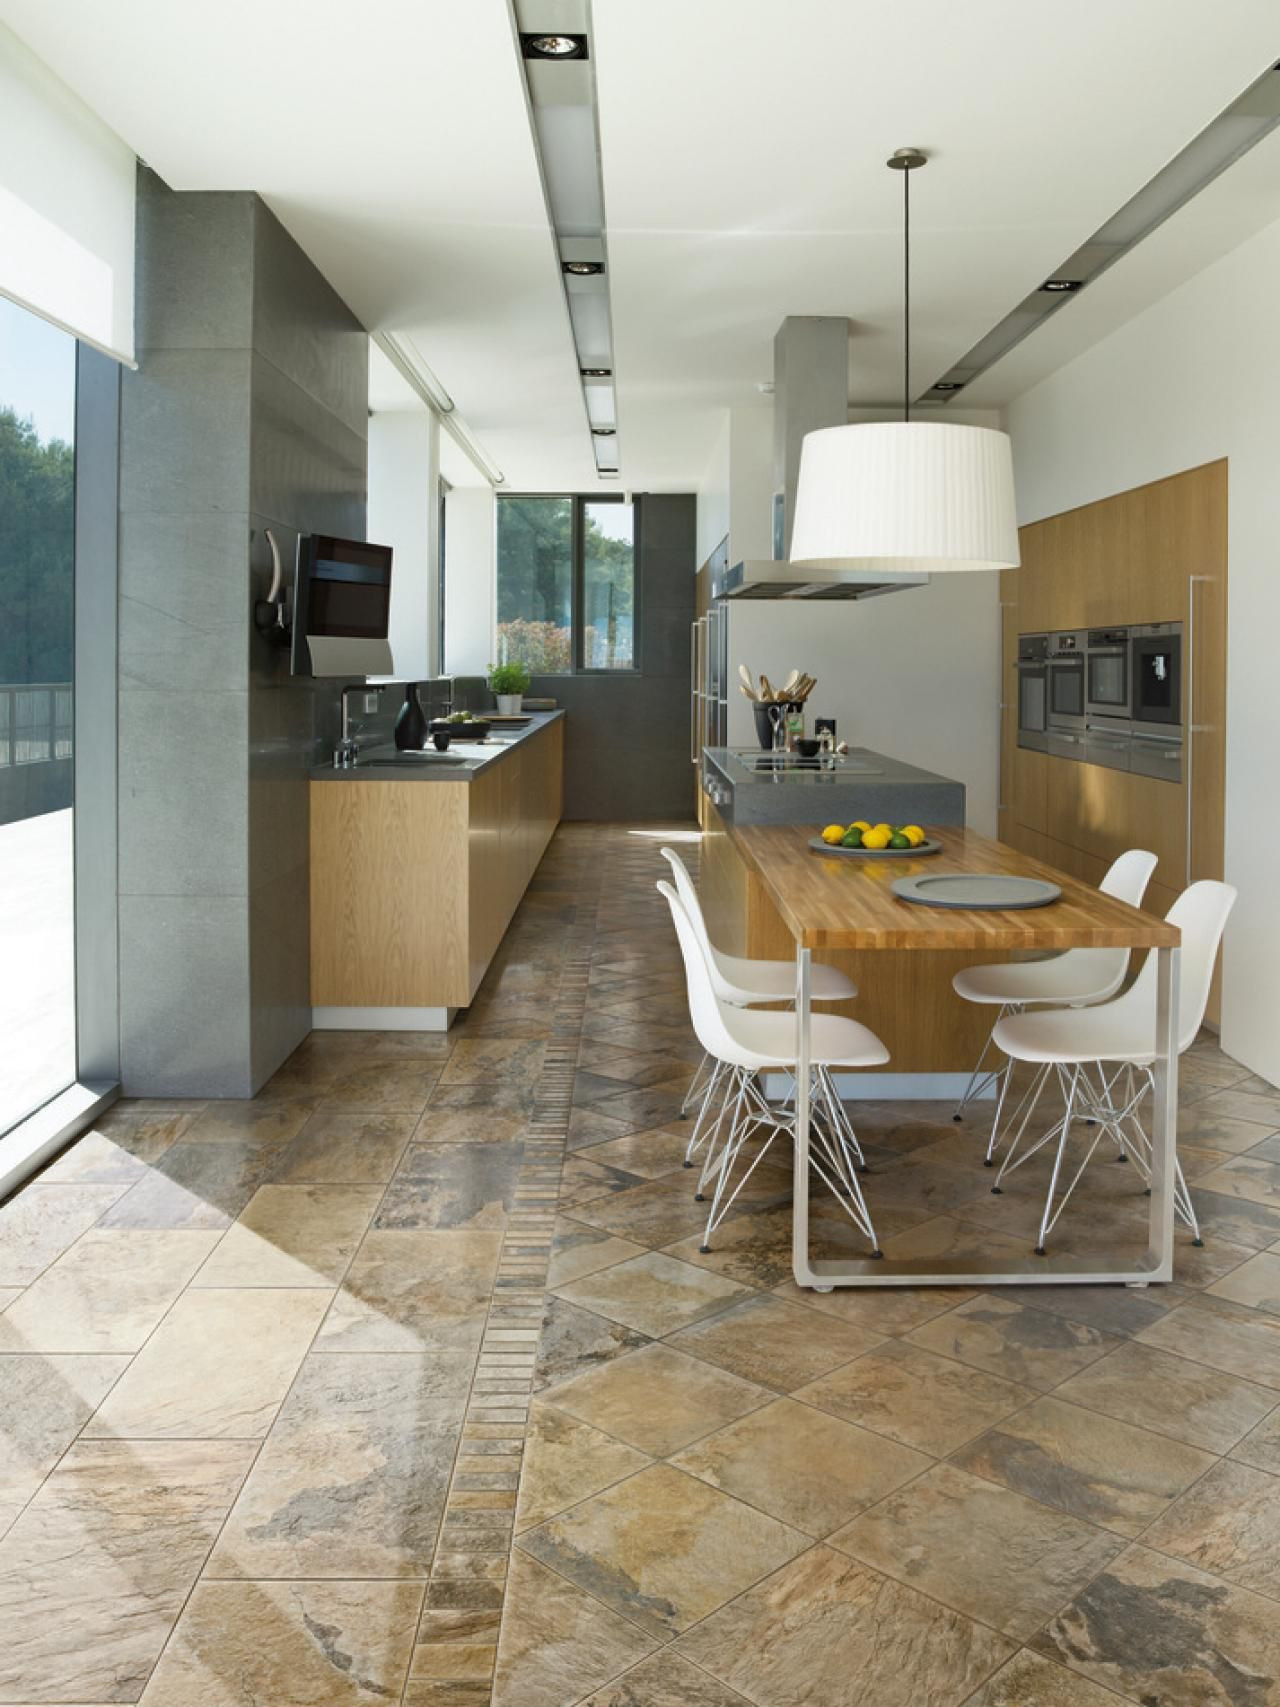 Kitchen with Tile Floor Luxury 18 Beautiful Examples Of Kitchen Floor Tile